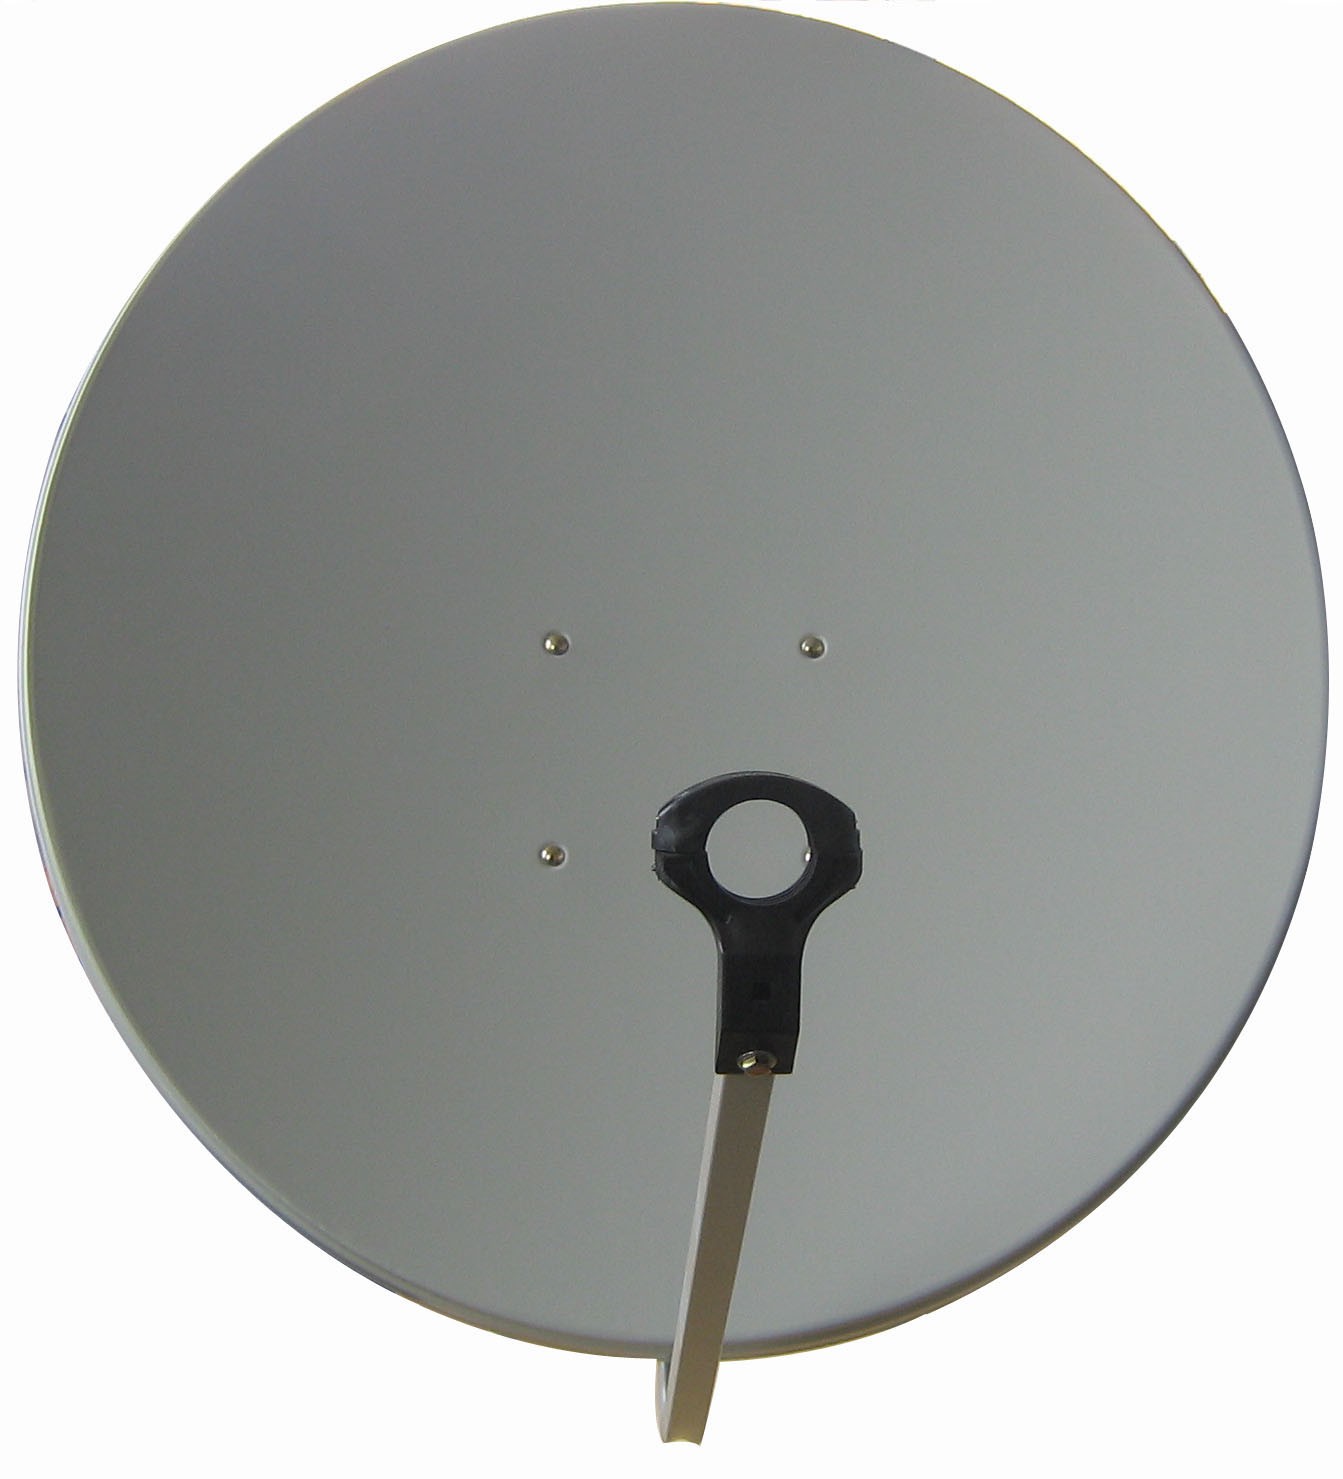 80cm Ku band satellite dish antenna